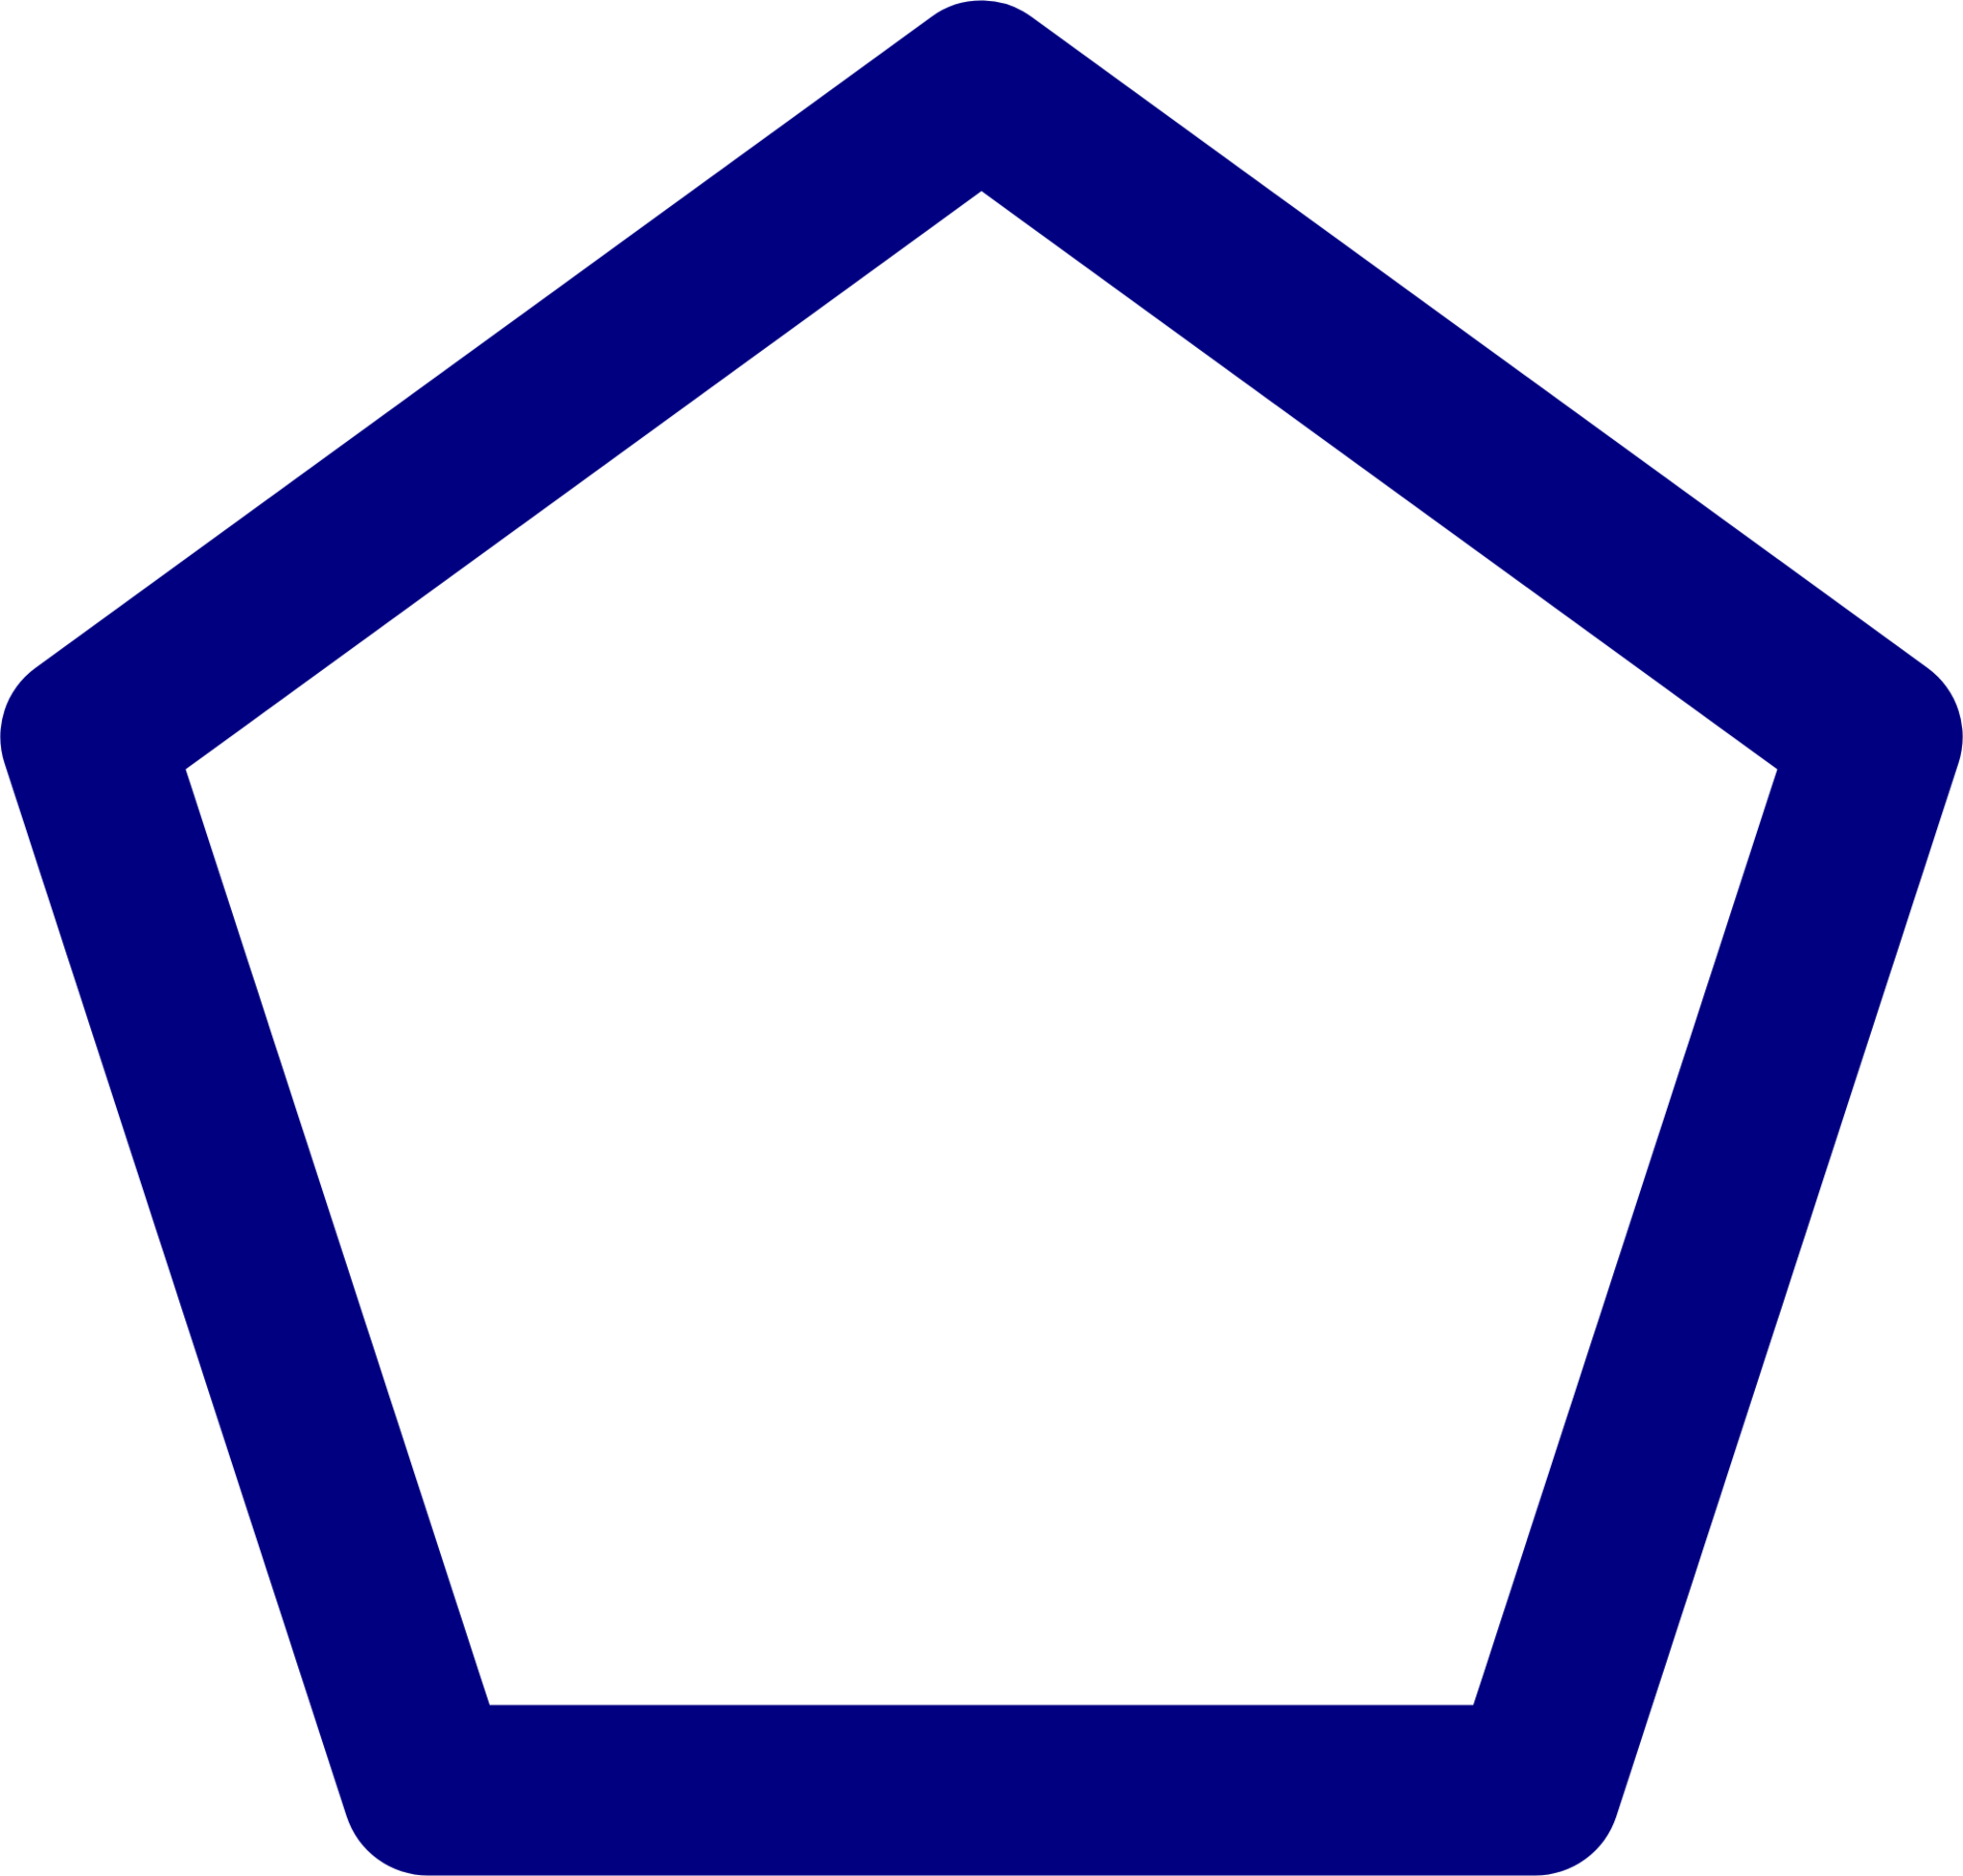 regular shape outline icon